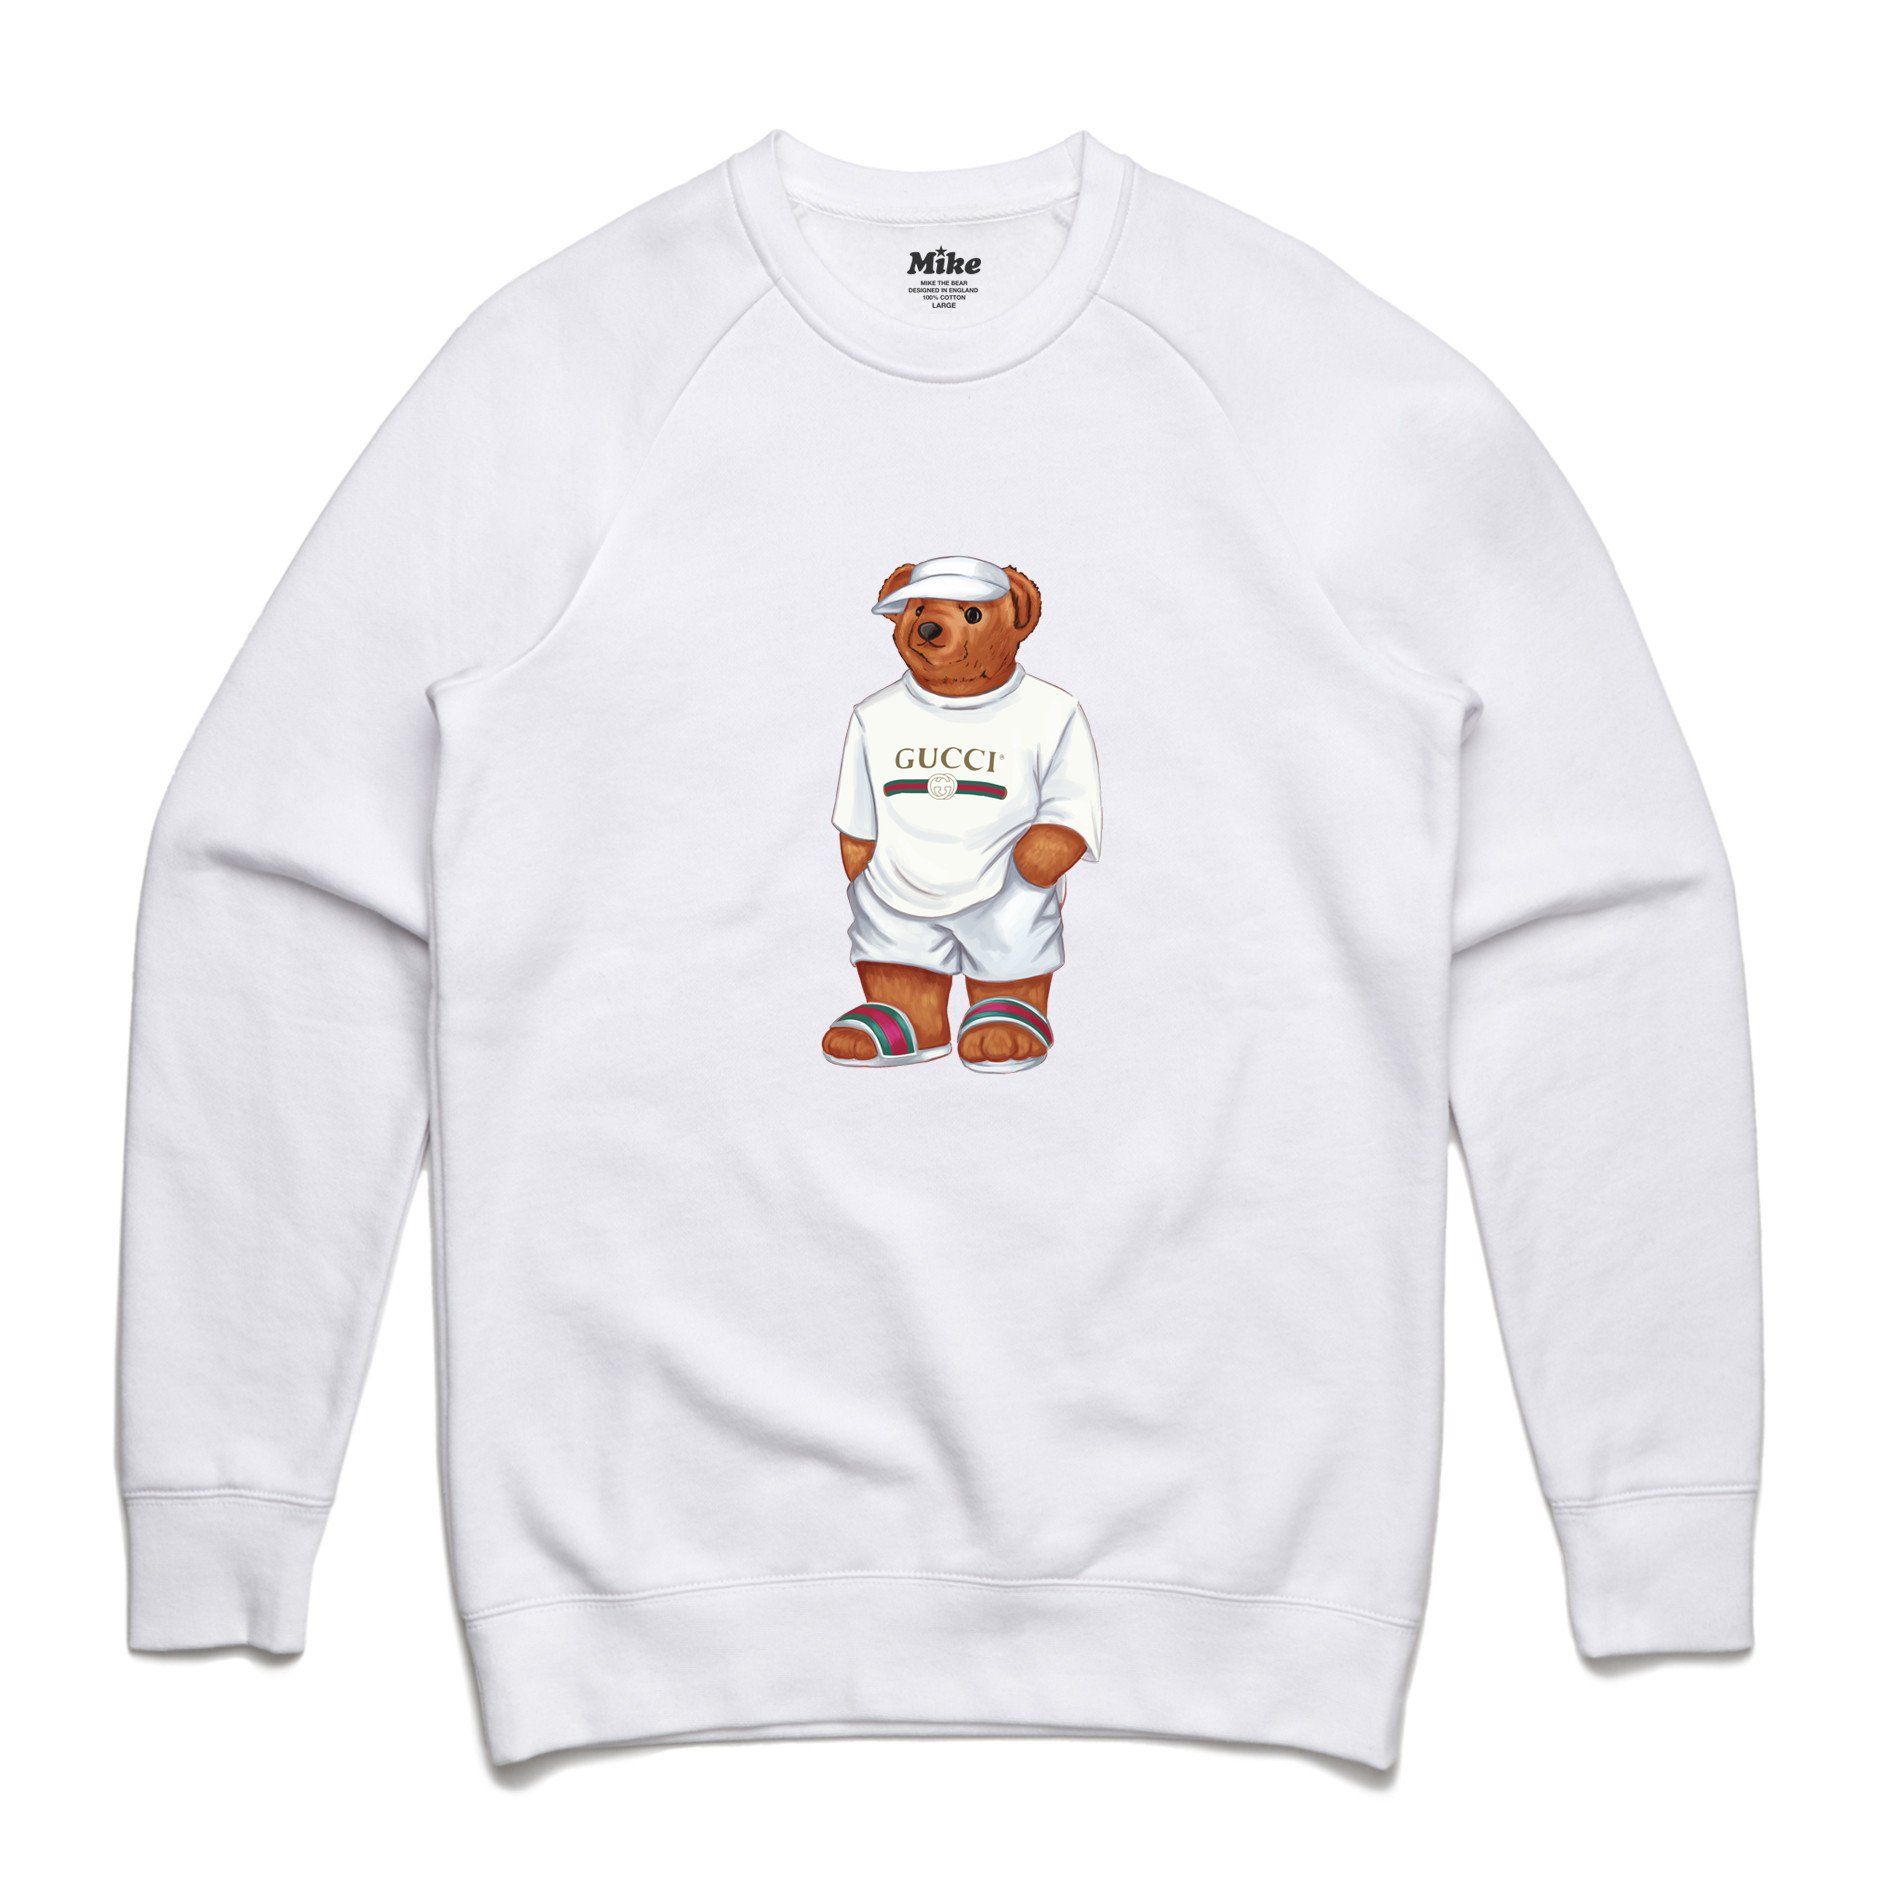 calvin klein teddy bear hoodie